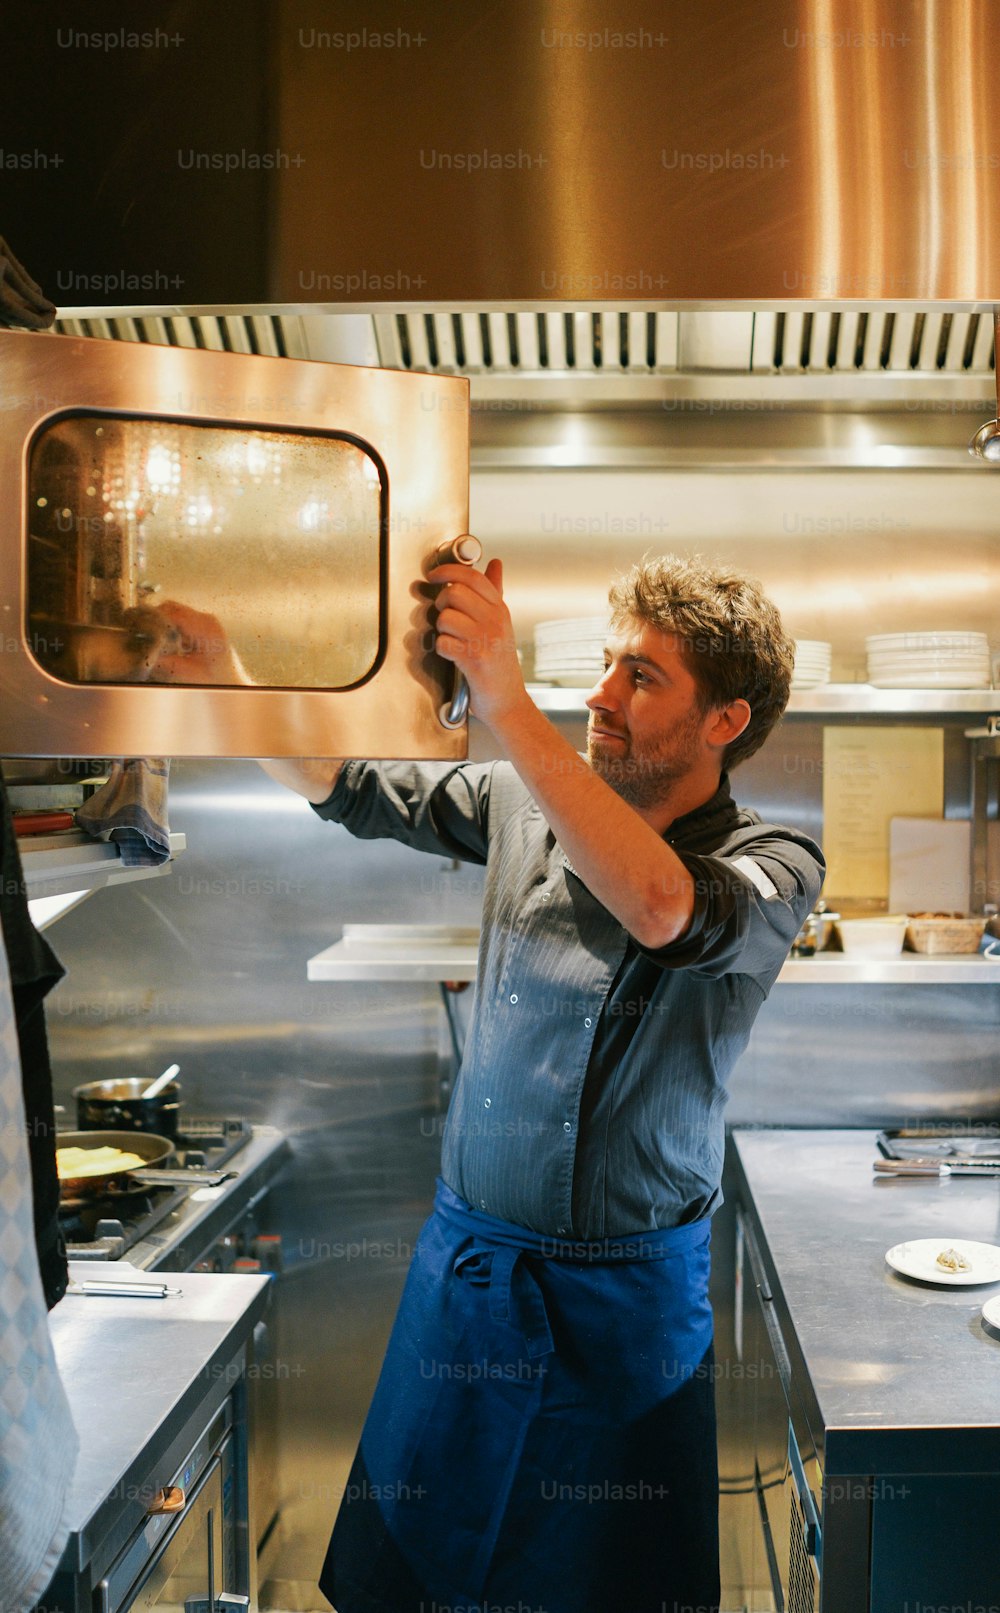 Un uomo che tiene un forno a microonde in una cucina